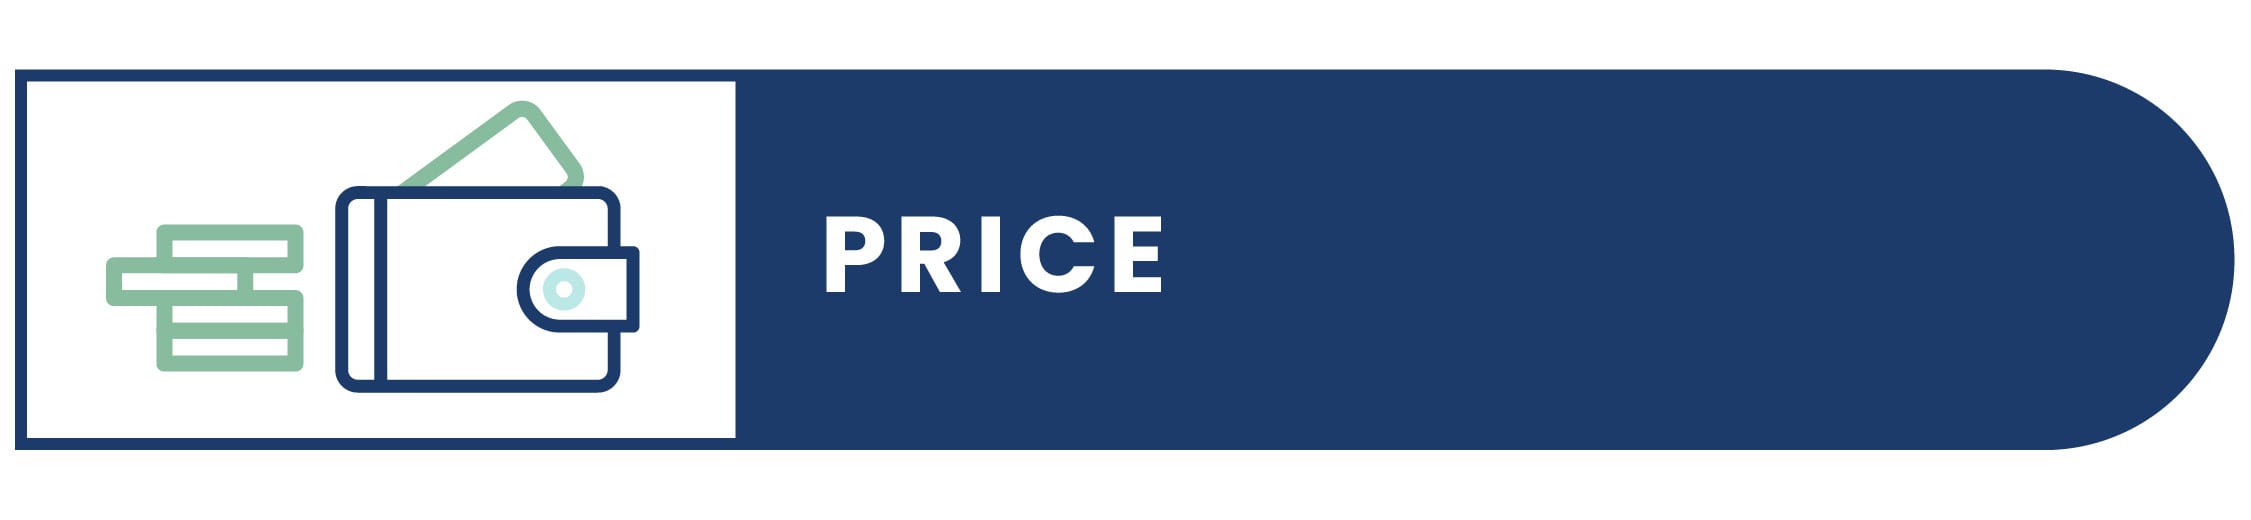 Electric Bike Price icon